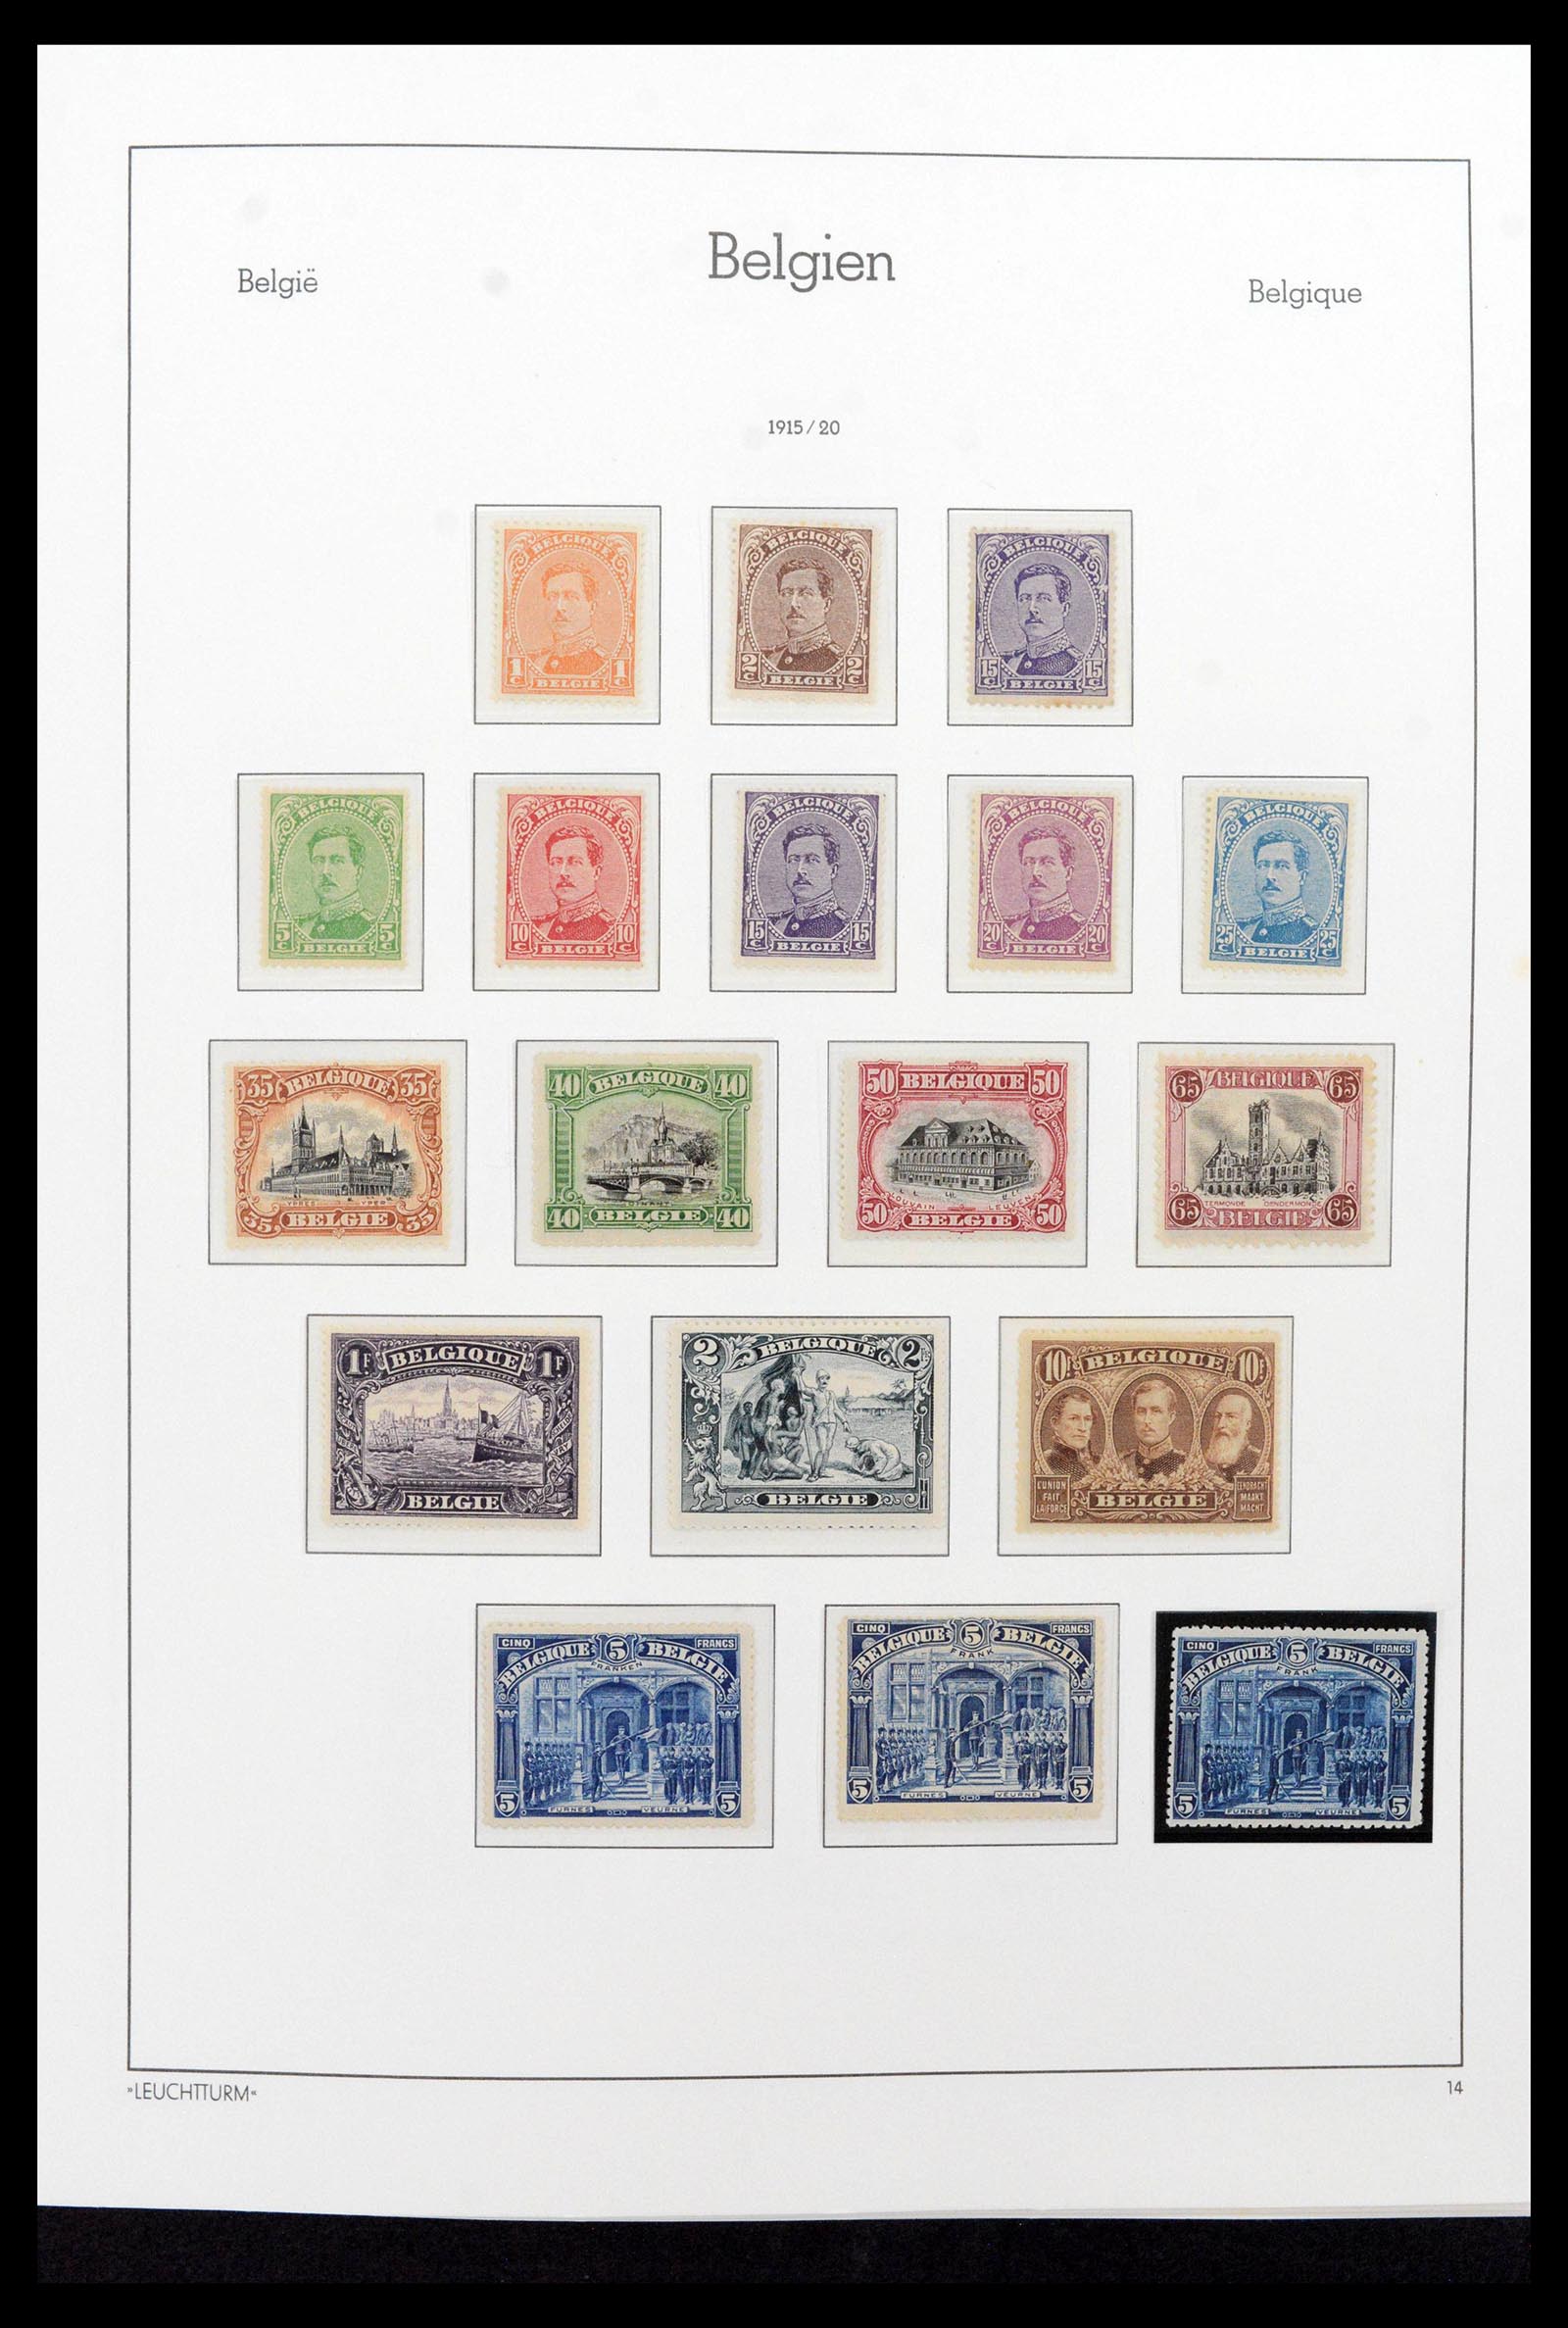 39137 0019 - Stamp collection 39137 Belgium 1849-2002.